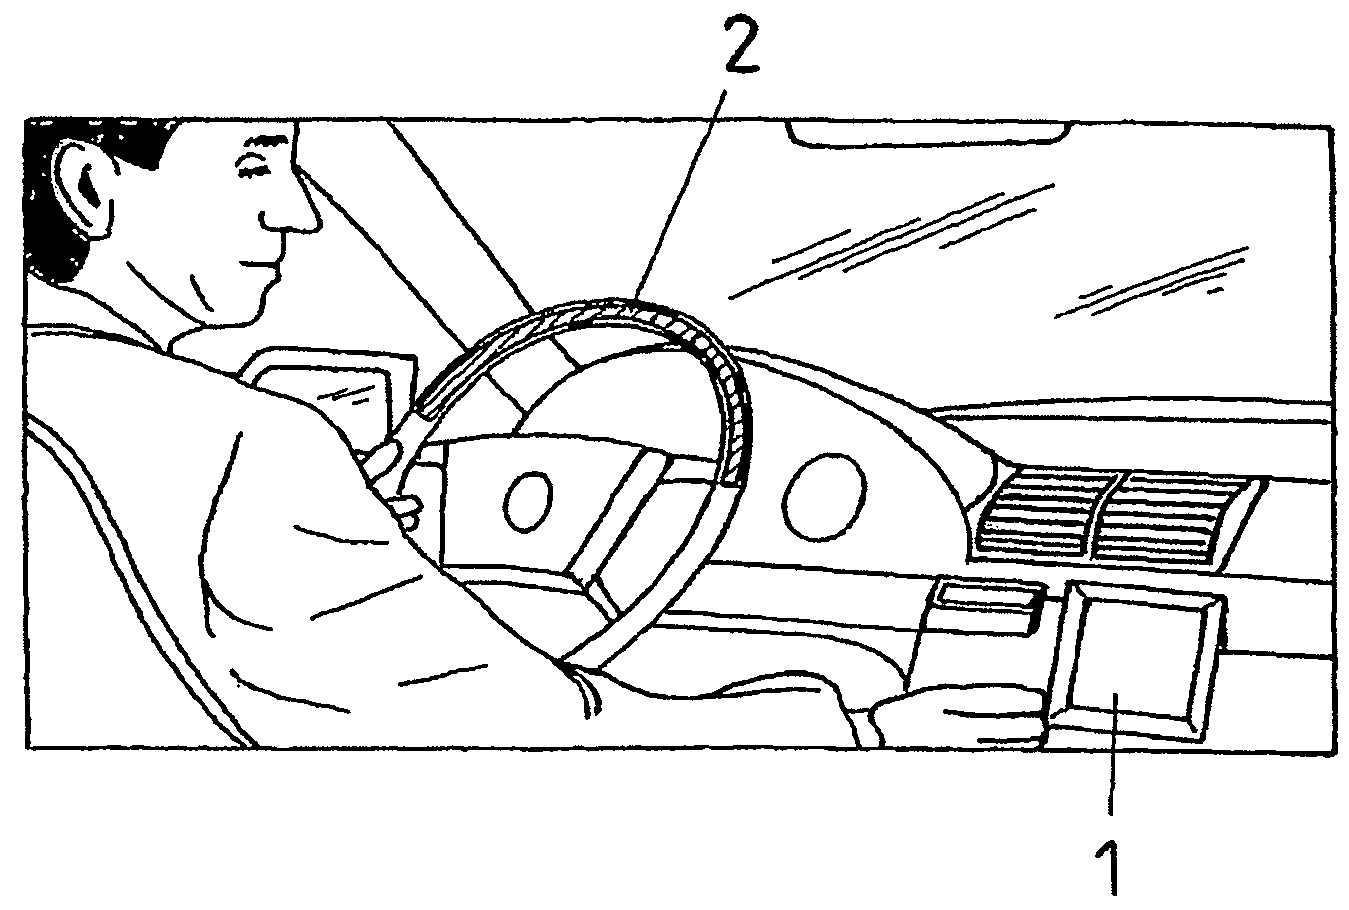 Steering wheel for motor vehicles